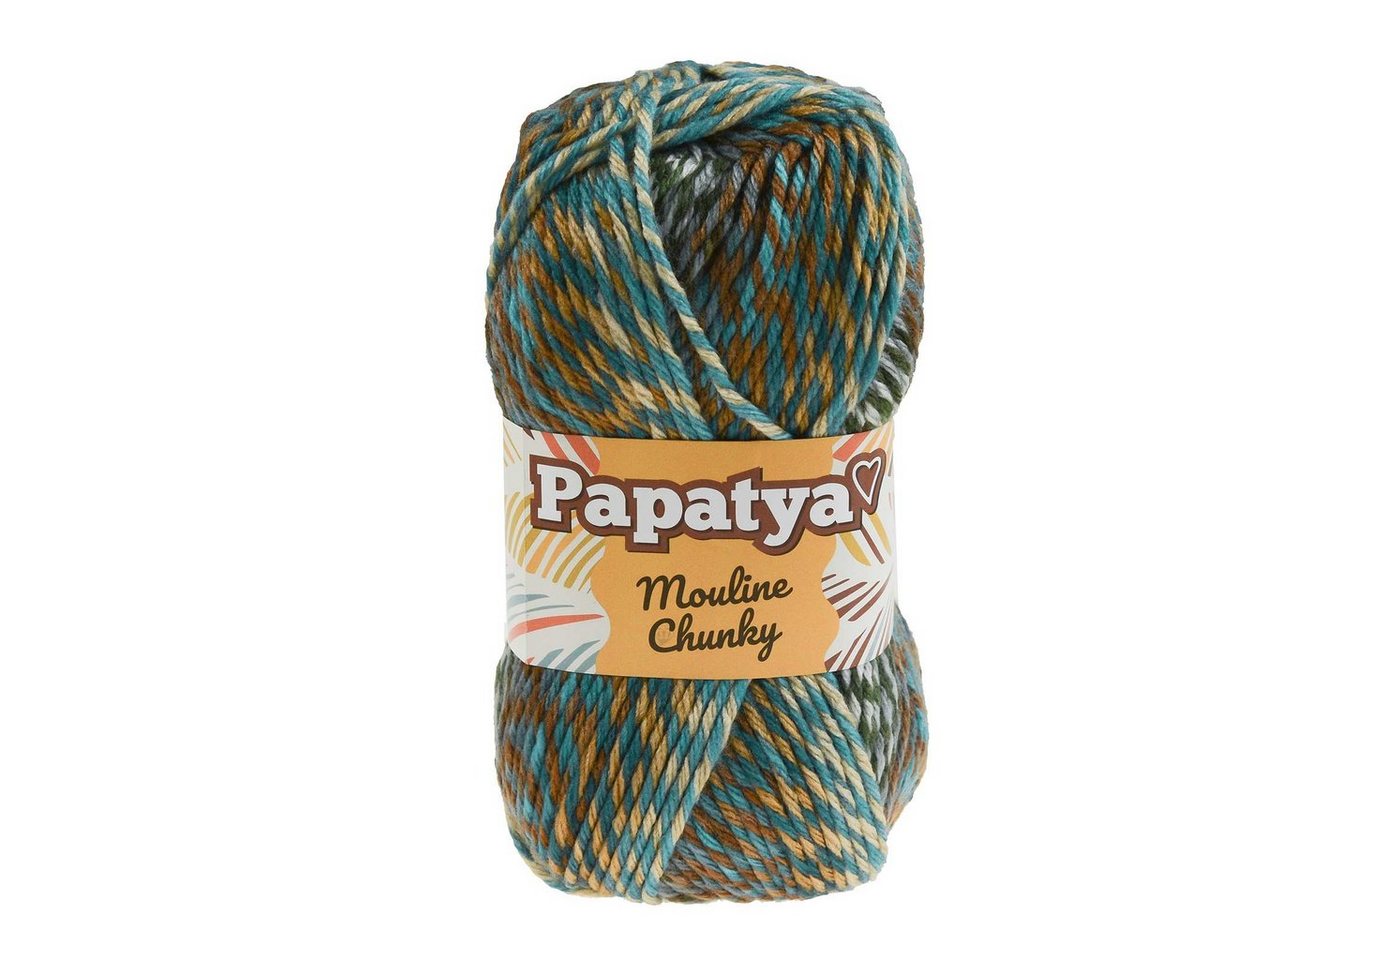 Papatya 100g Strickgarn Papatya Mouline Chunky Strickwolle mehrfarbig Effektgarn, 160 m, 1105 mehrfarbig von Papatya